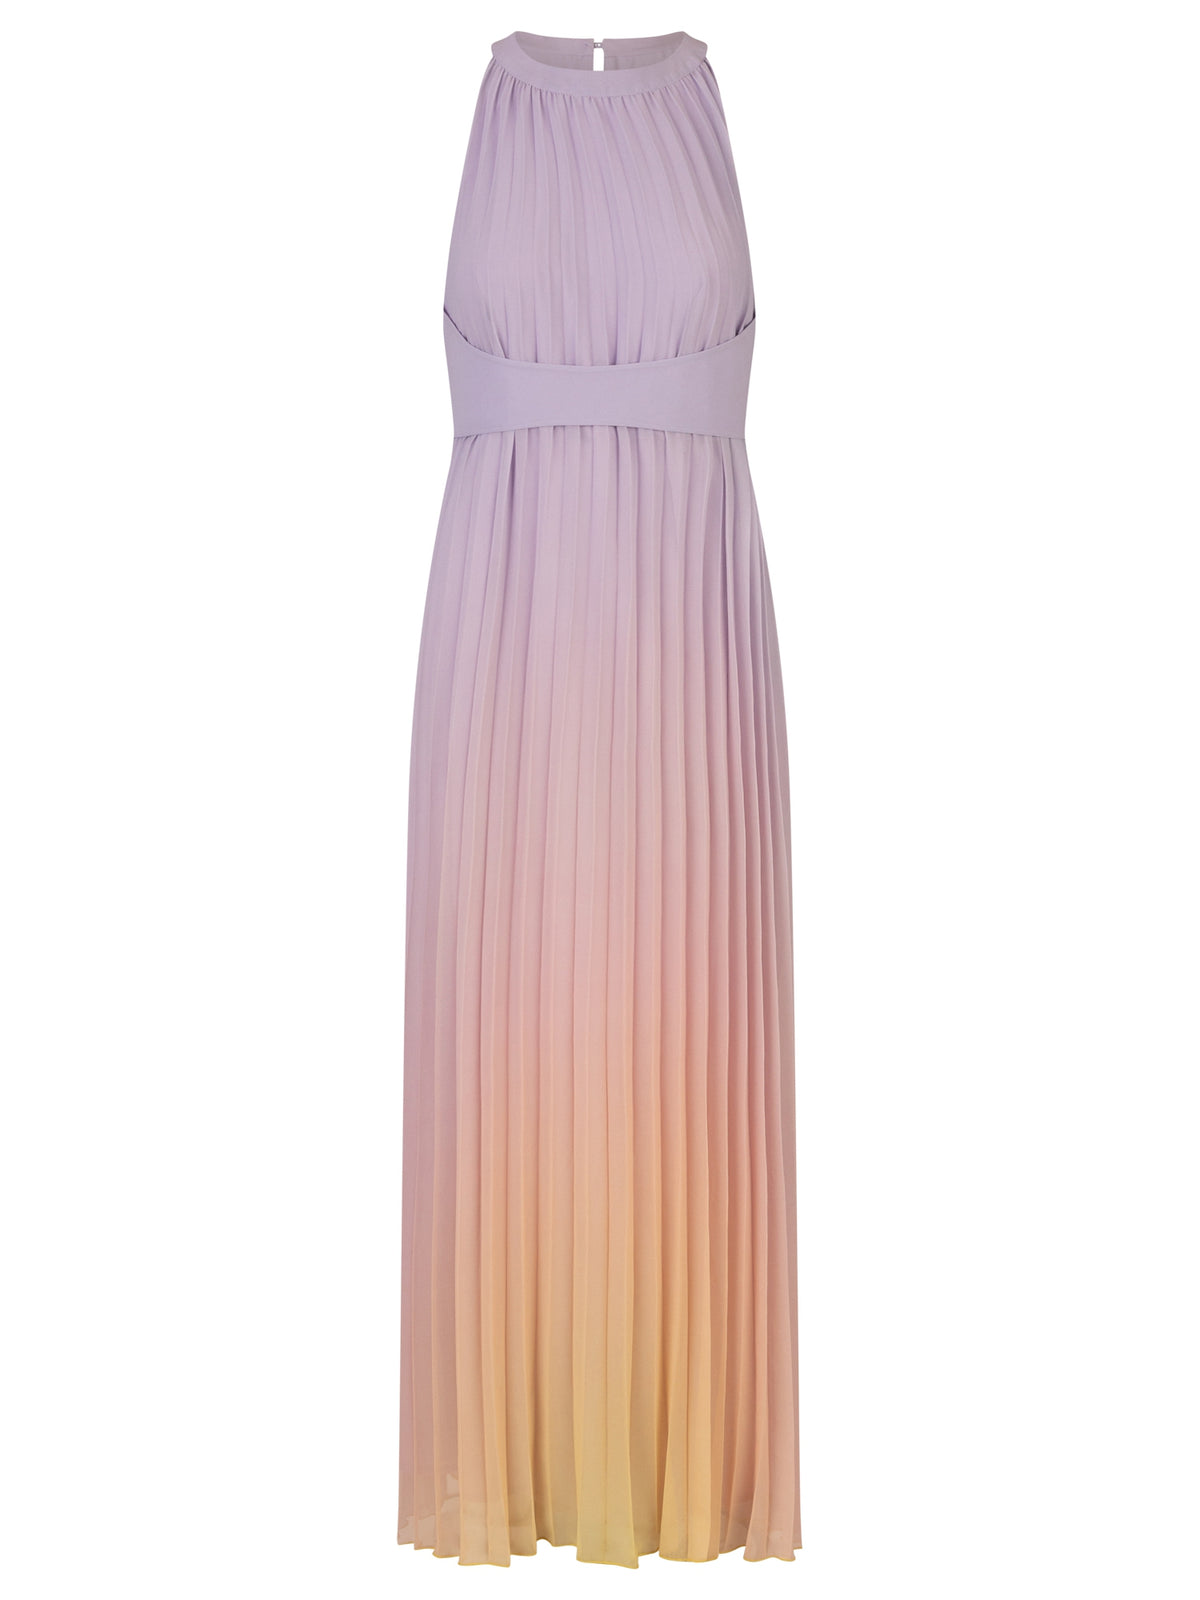 APART Abendkleid im Farbverlauf, aus leicht körnigem, plissiertem Chiffon | lila-multicolor